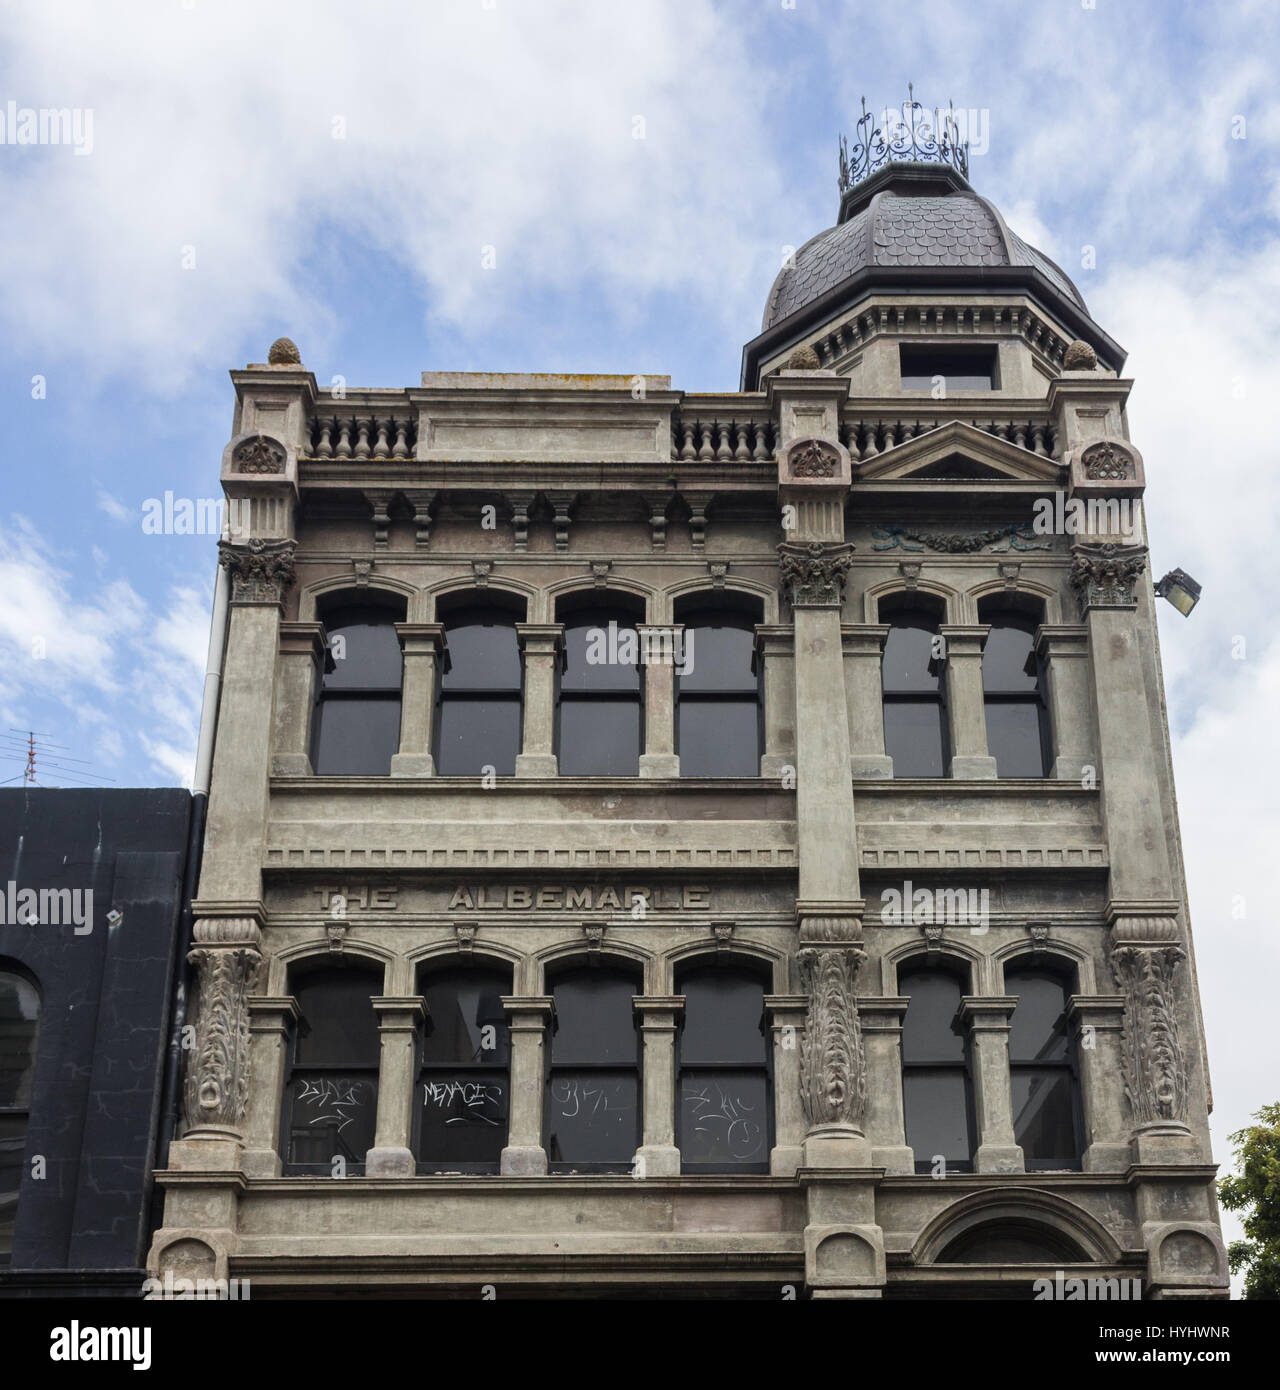 Wellington, New Zealand - February 10, 2017: The Albemarle building facade at Cuba Mall street. Stock Photo